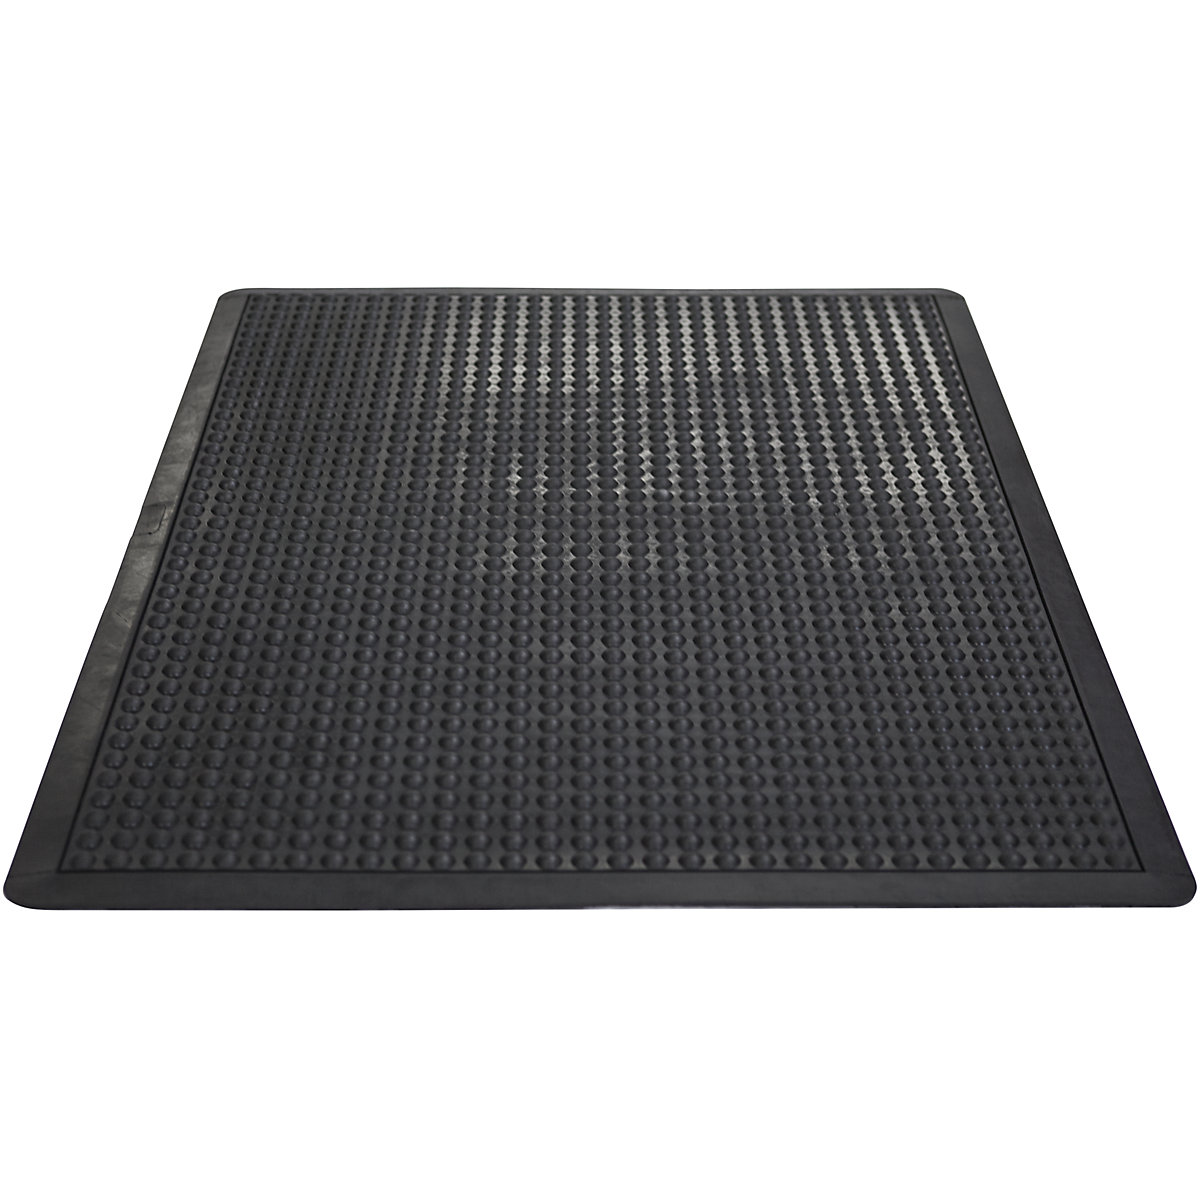 YOGA DOME anti-fatigue matting, black studs, LxW 1200 x 900 mm-4